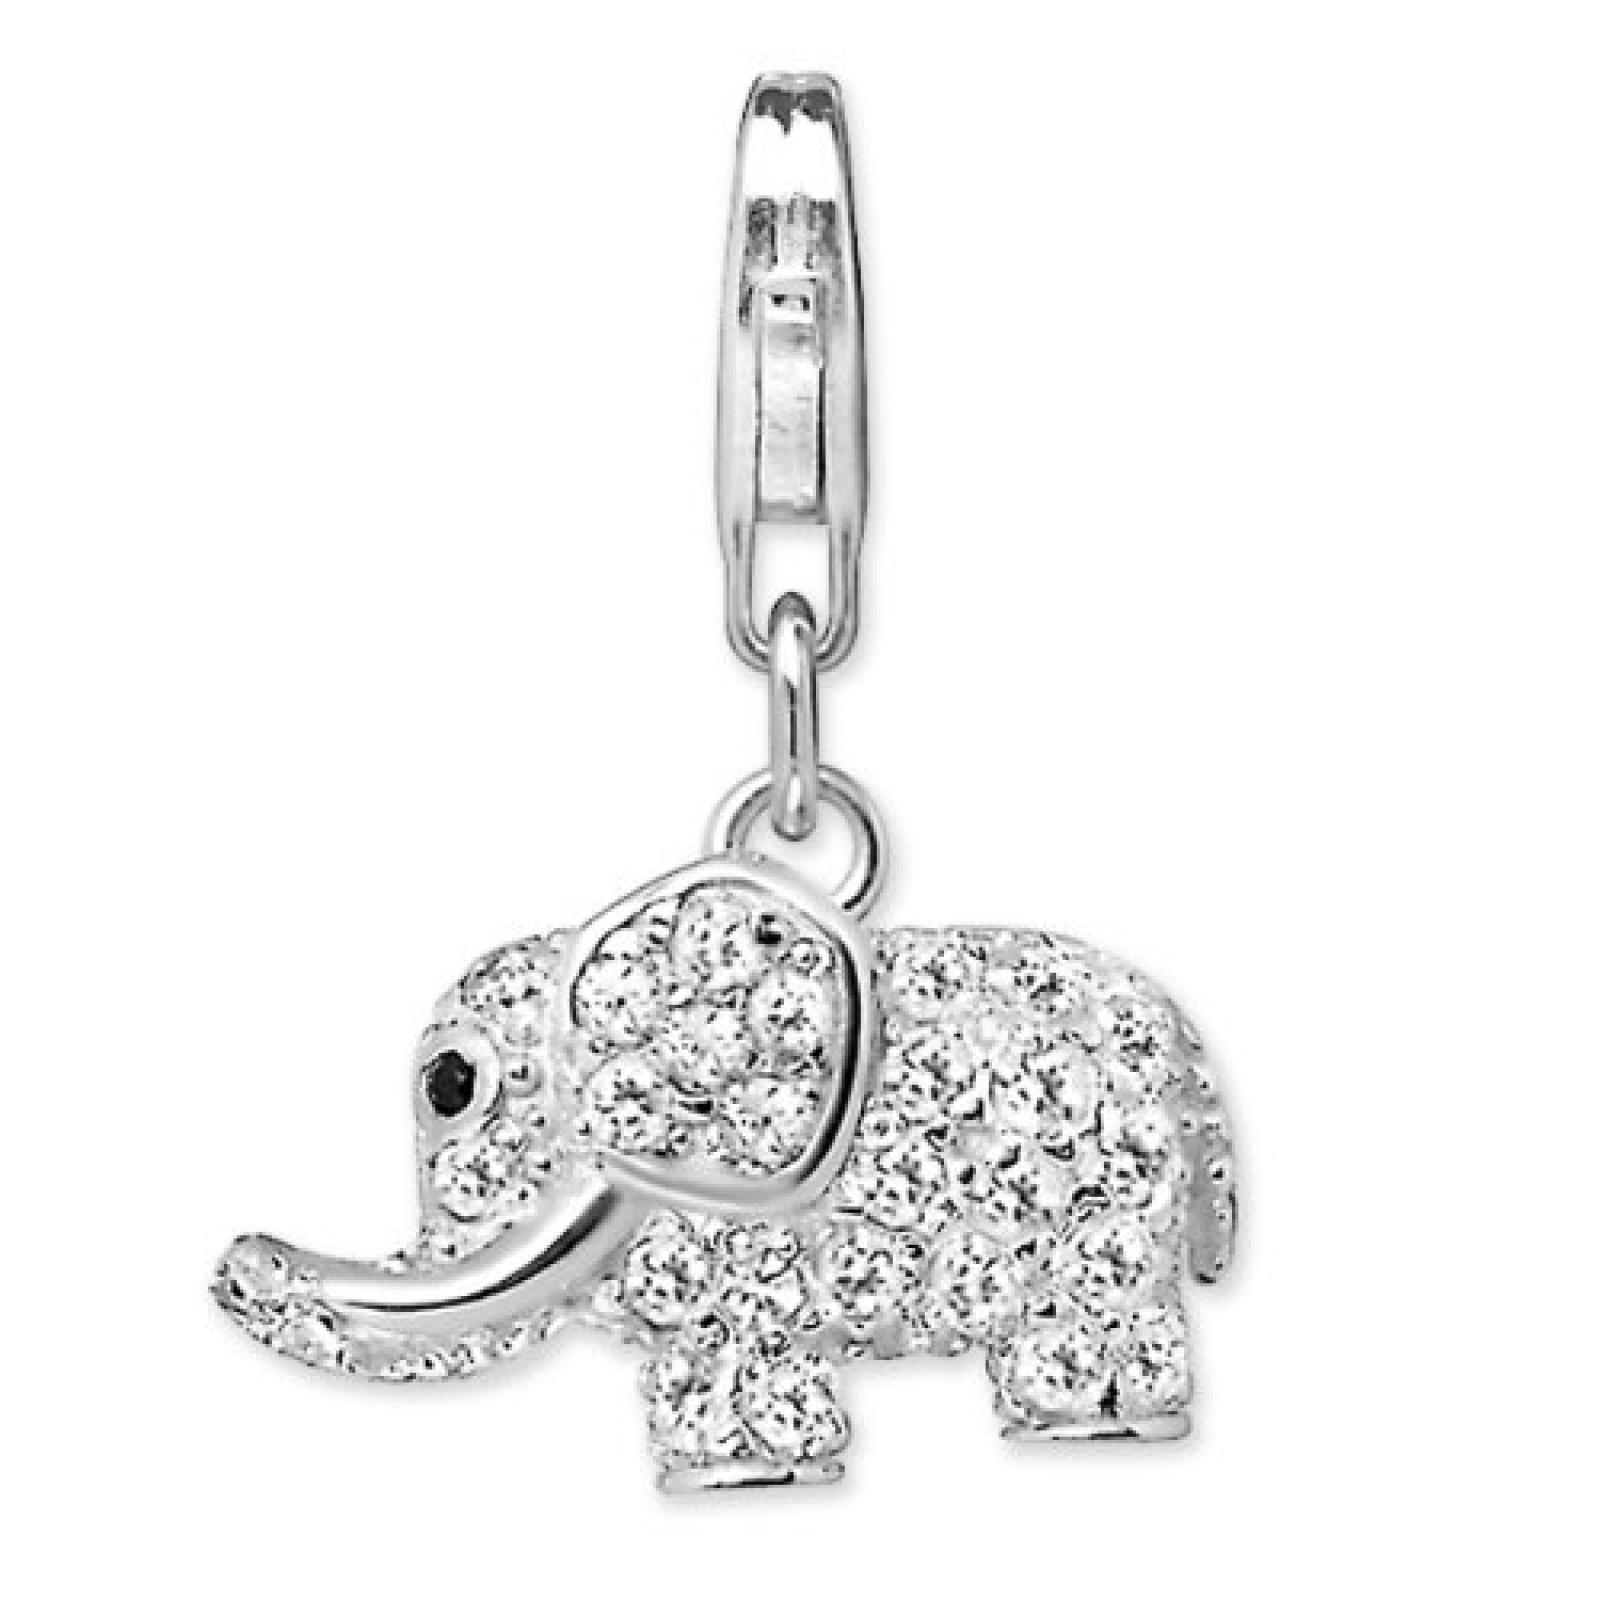 Rafaela Donata Charm Collection Damen-Charm Elefant 925 Sterling Silber Zirkonia weiß  60600275 